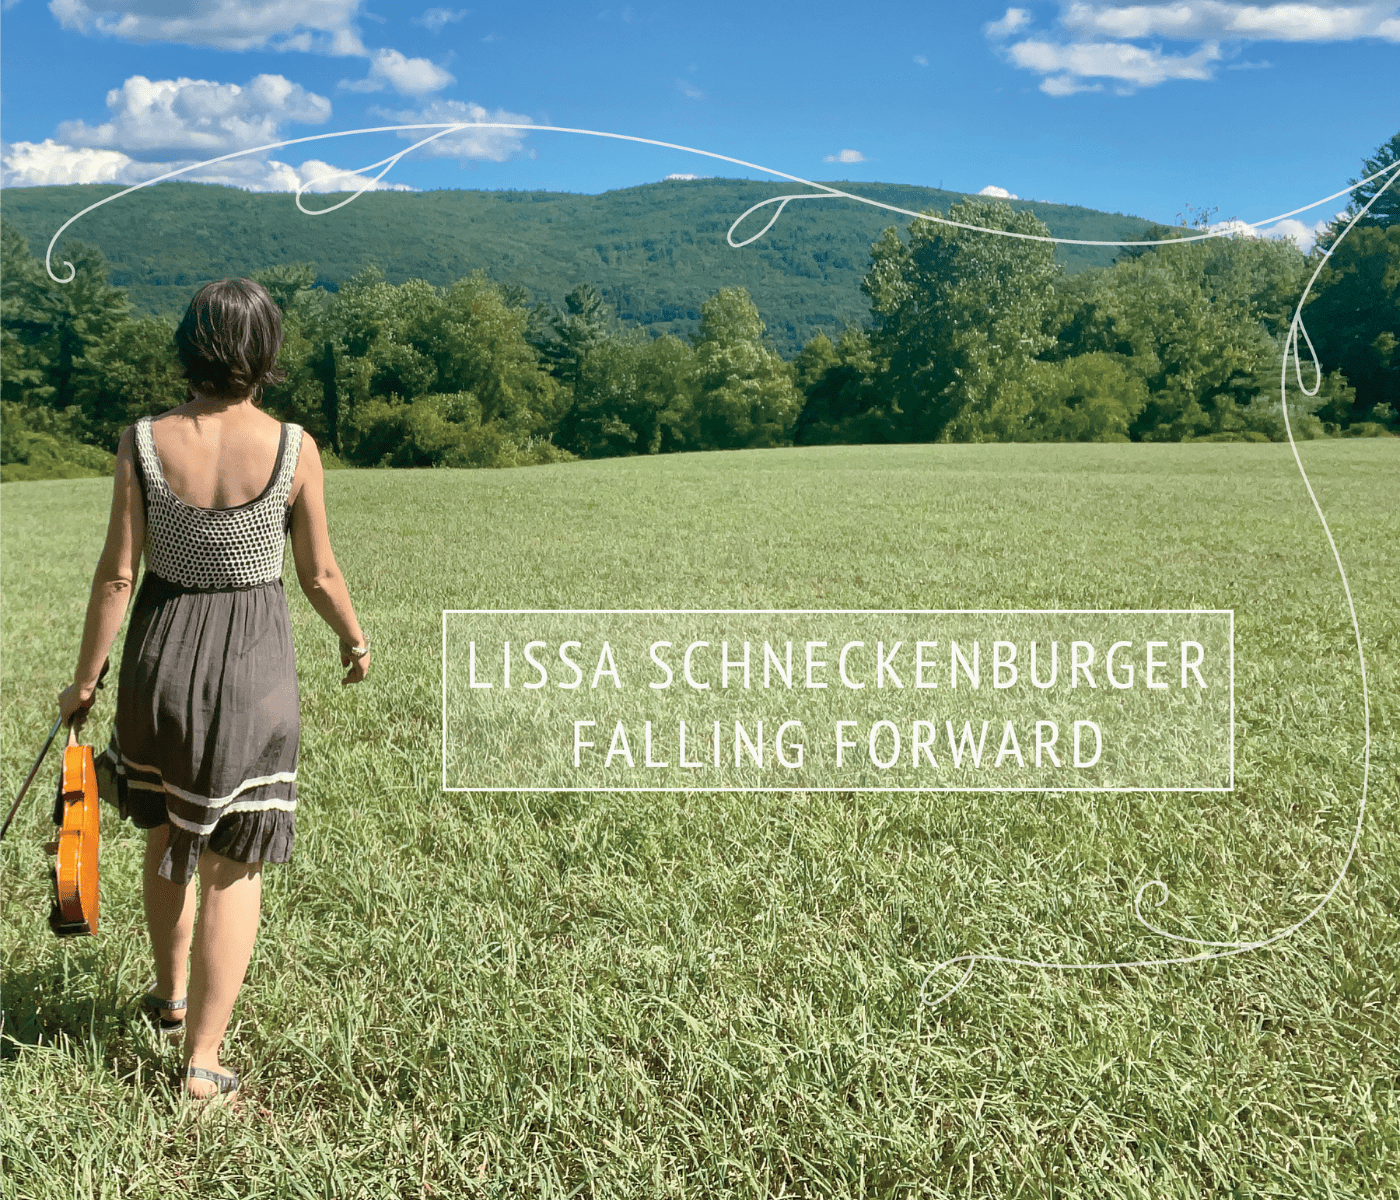 Lissa-Schneckenburger-falling-forward-album-cover-link-to-bandcamp-download